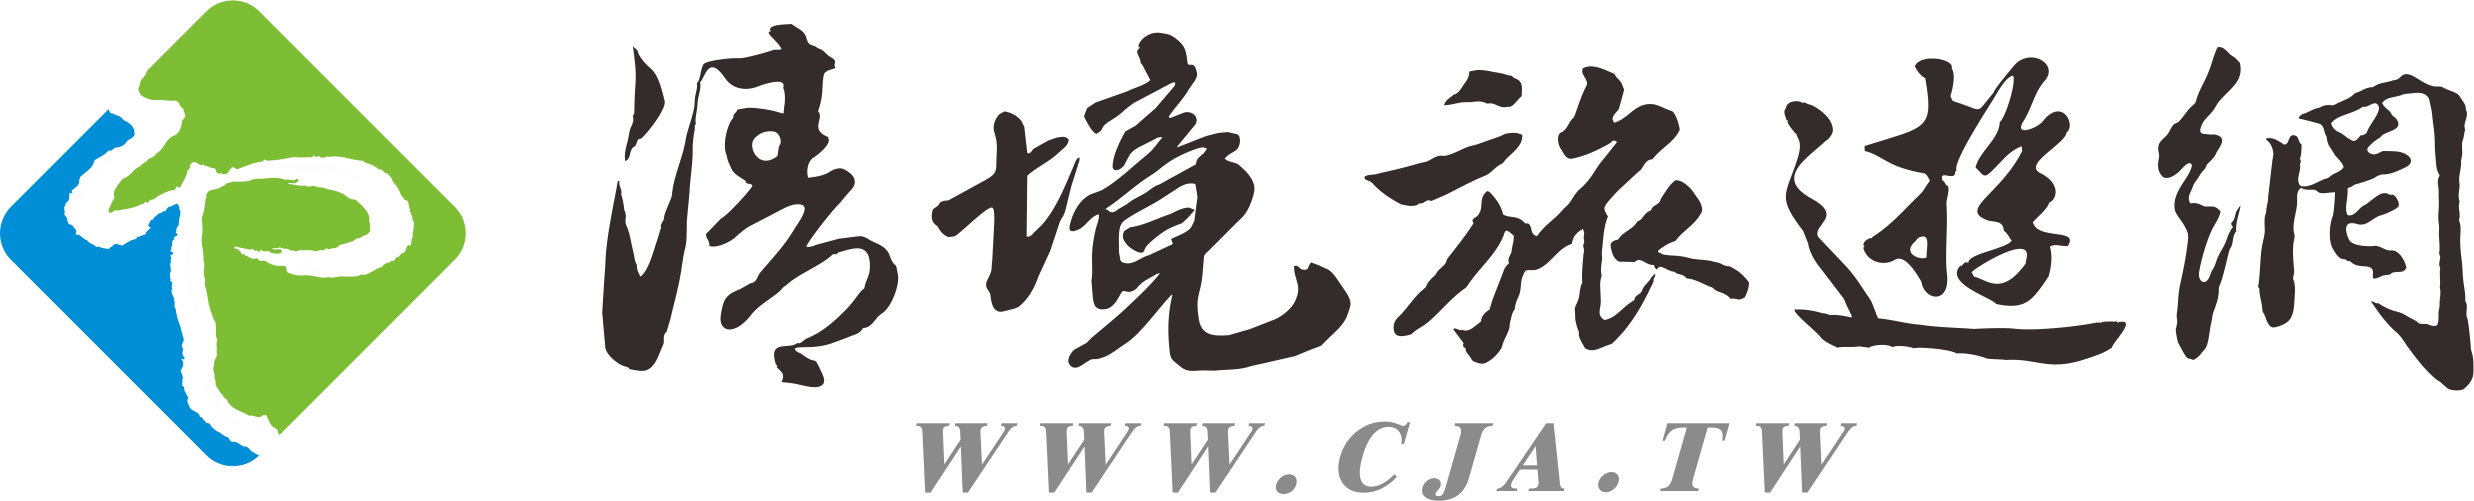 CJA 清境旅遊網